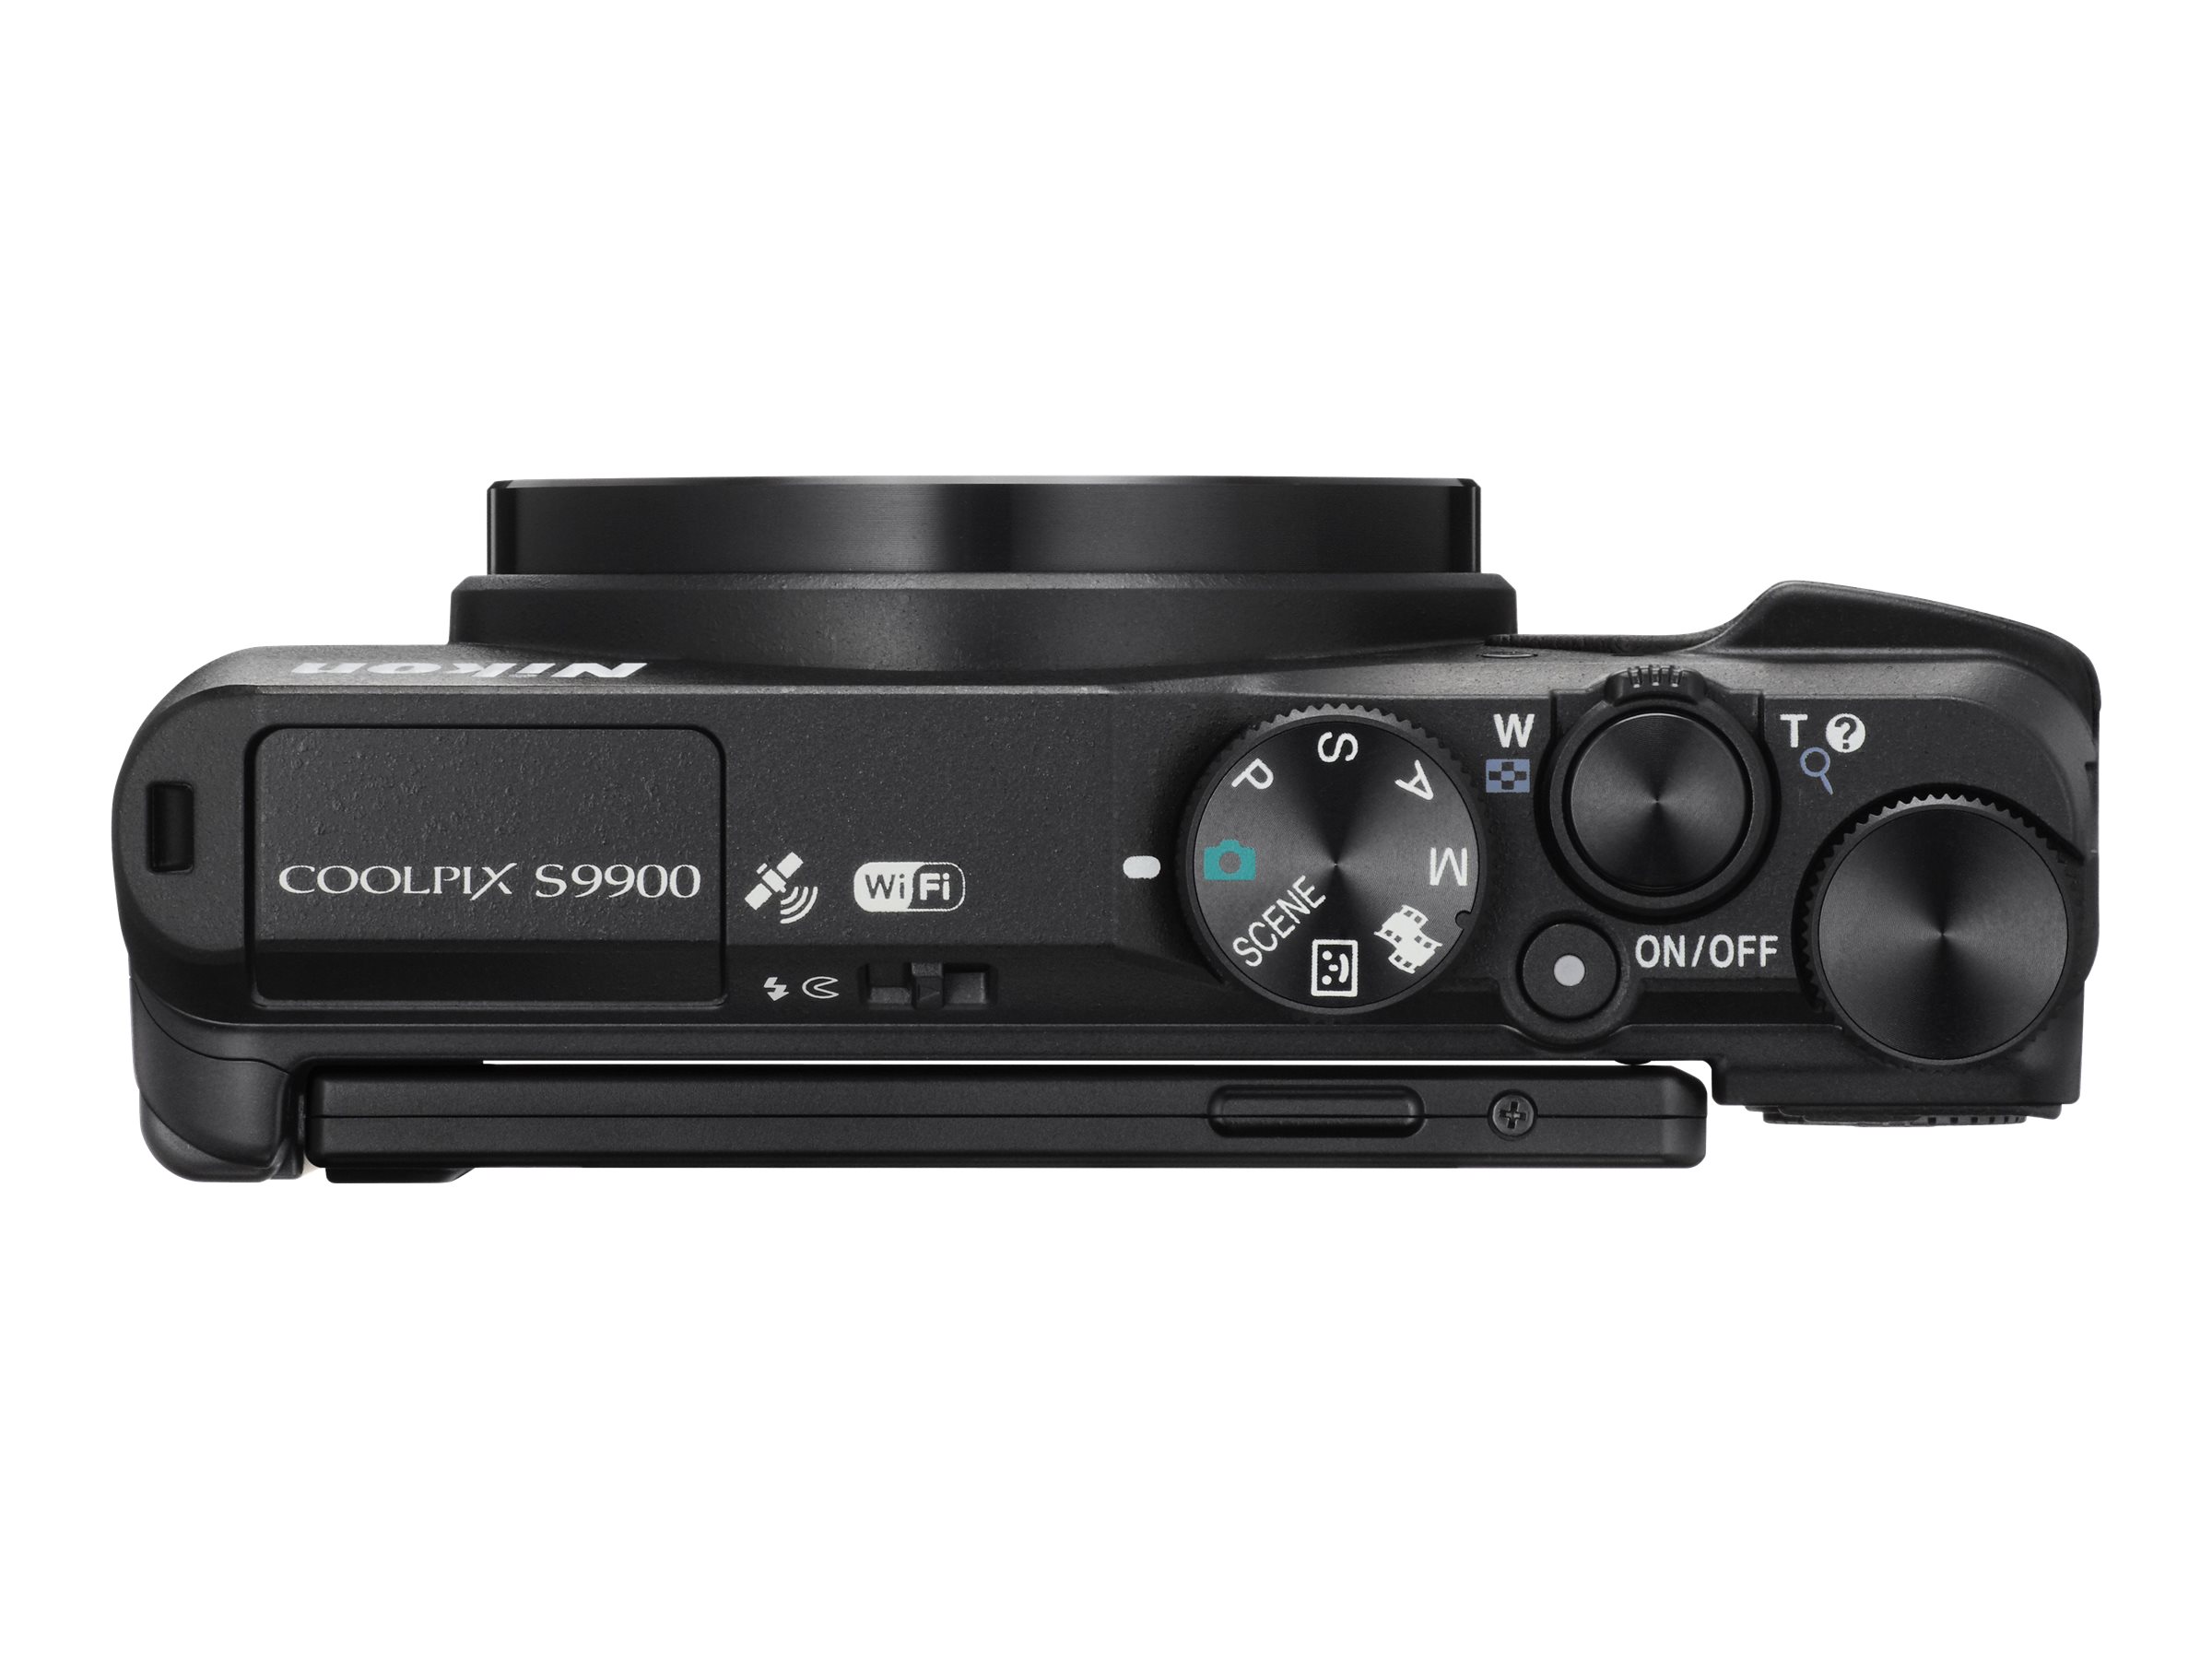 Nikon Coolpix S9900 - Digital camera - compact - 16.0 MP - 1080p - 30x optical zoom - Wi-Fi, NFC - black - image 4 of 6